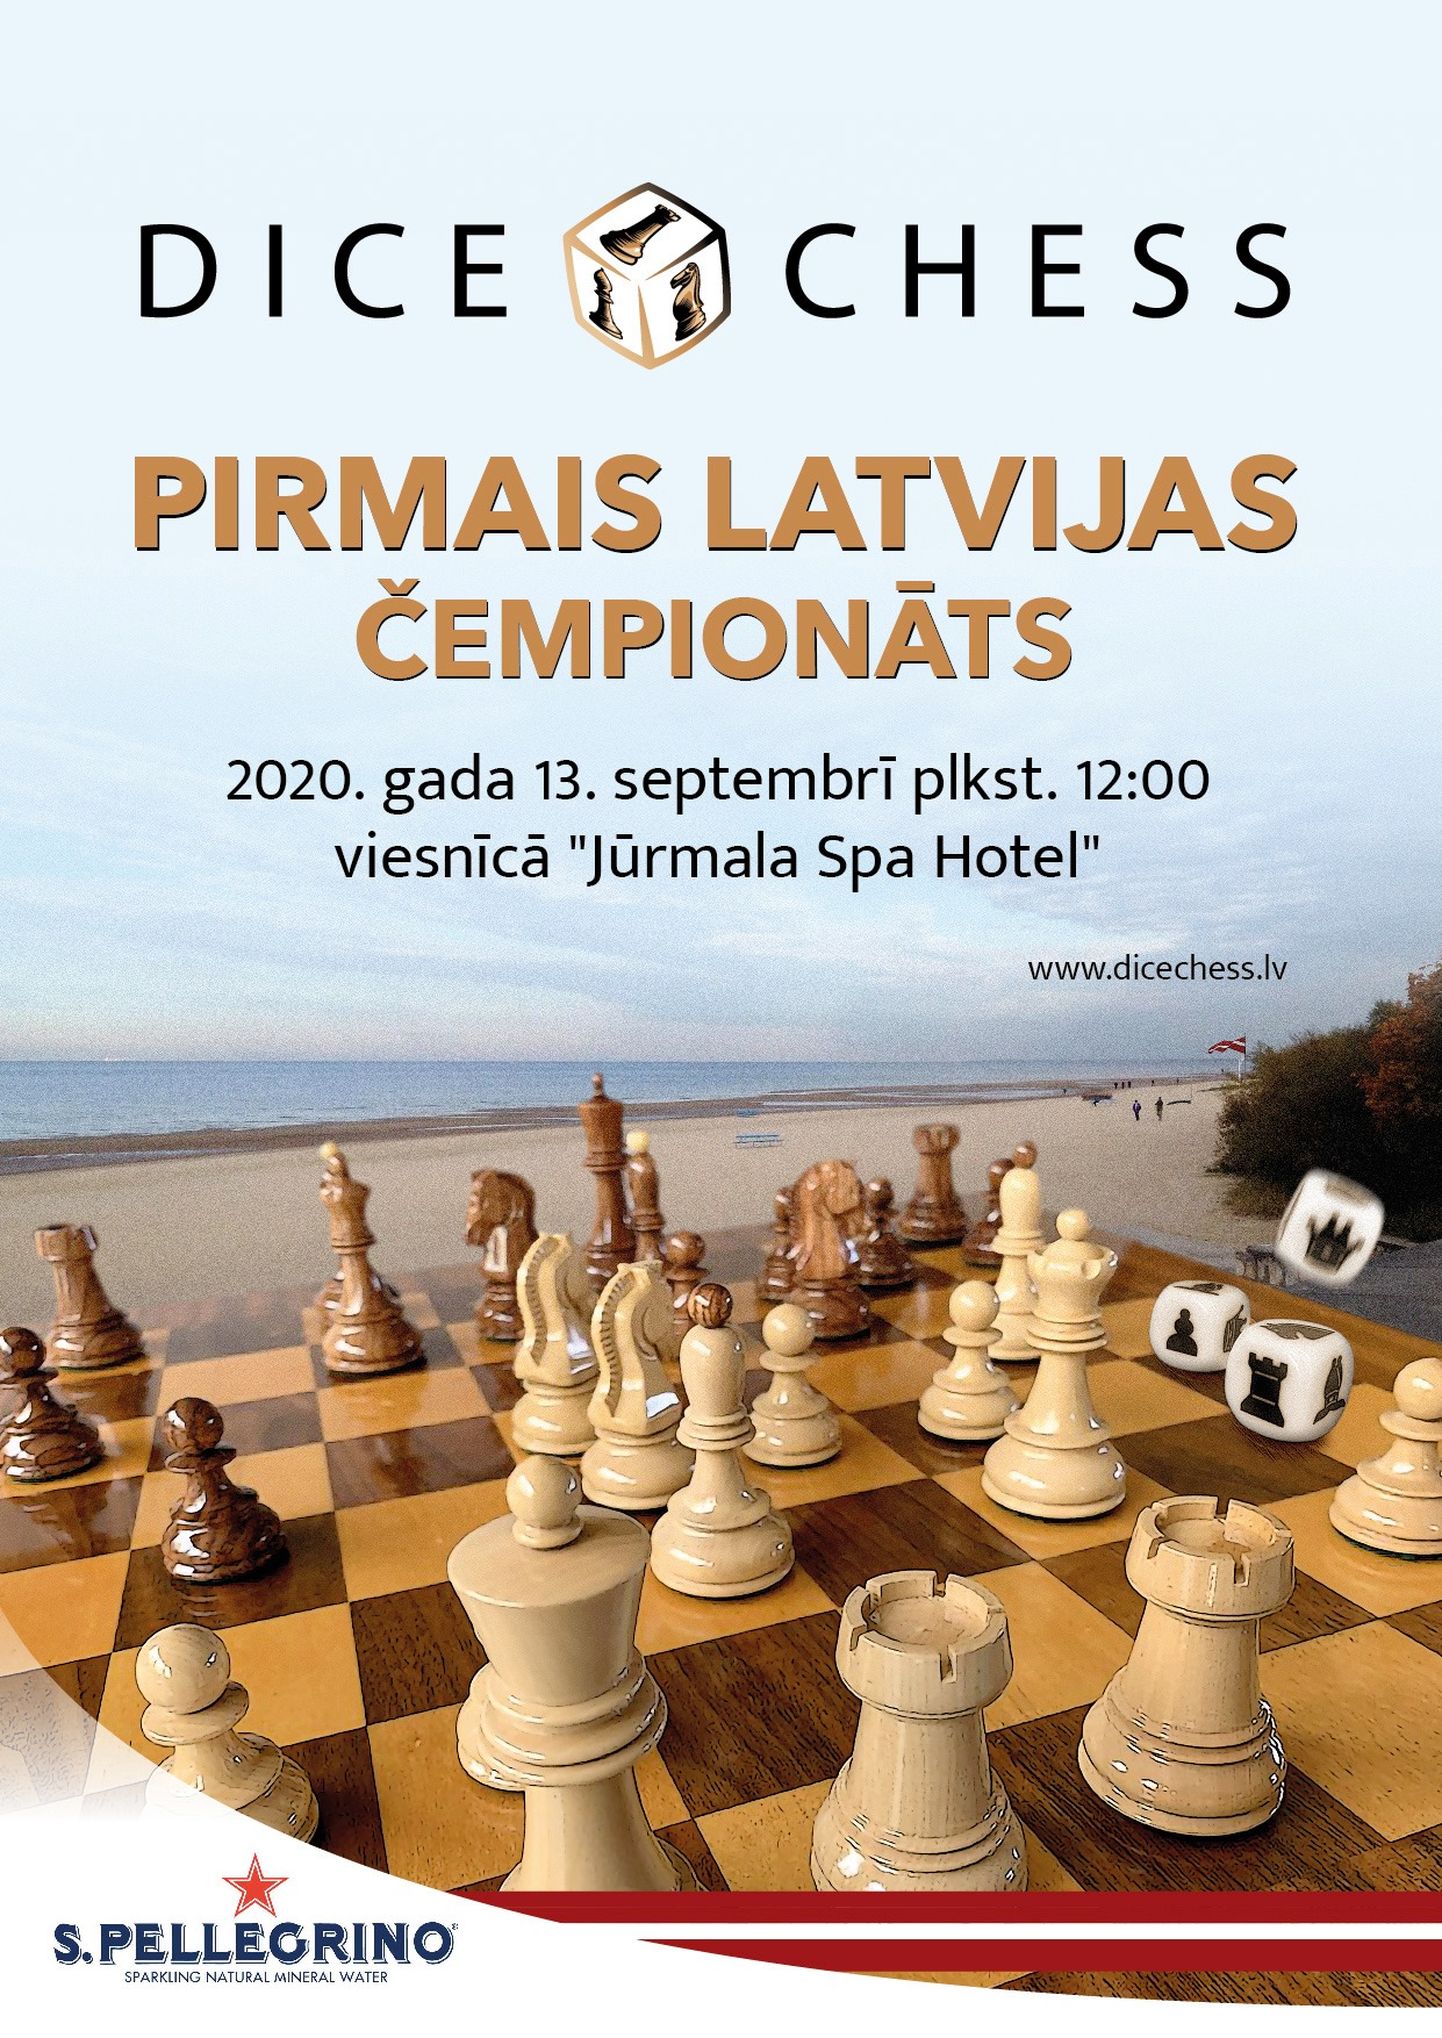 Pirmais "Dice chess" Latvijas čempionāts